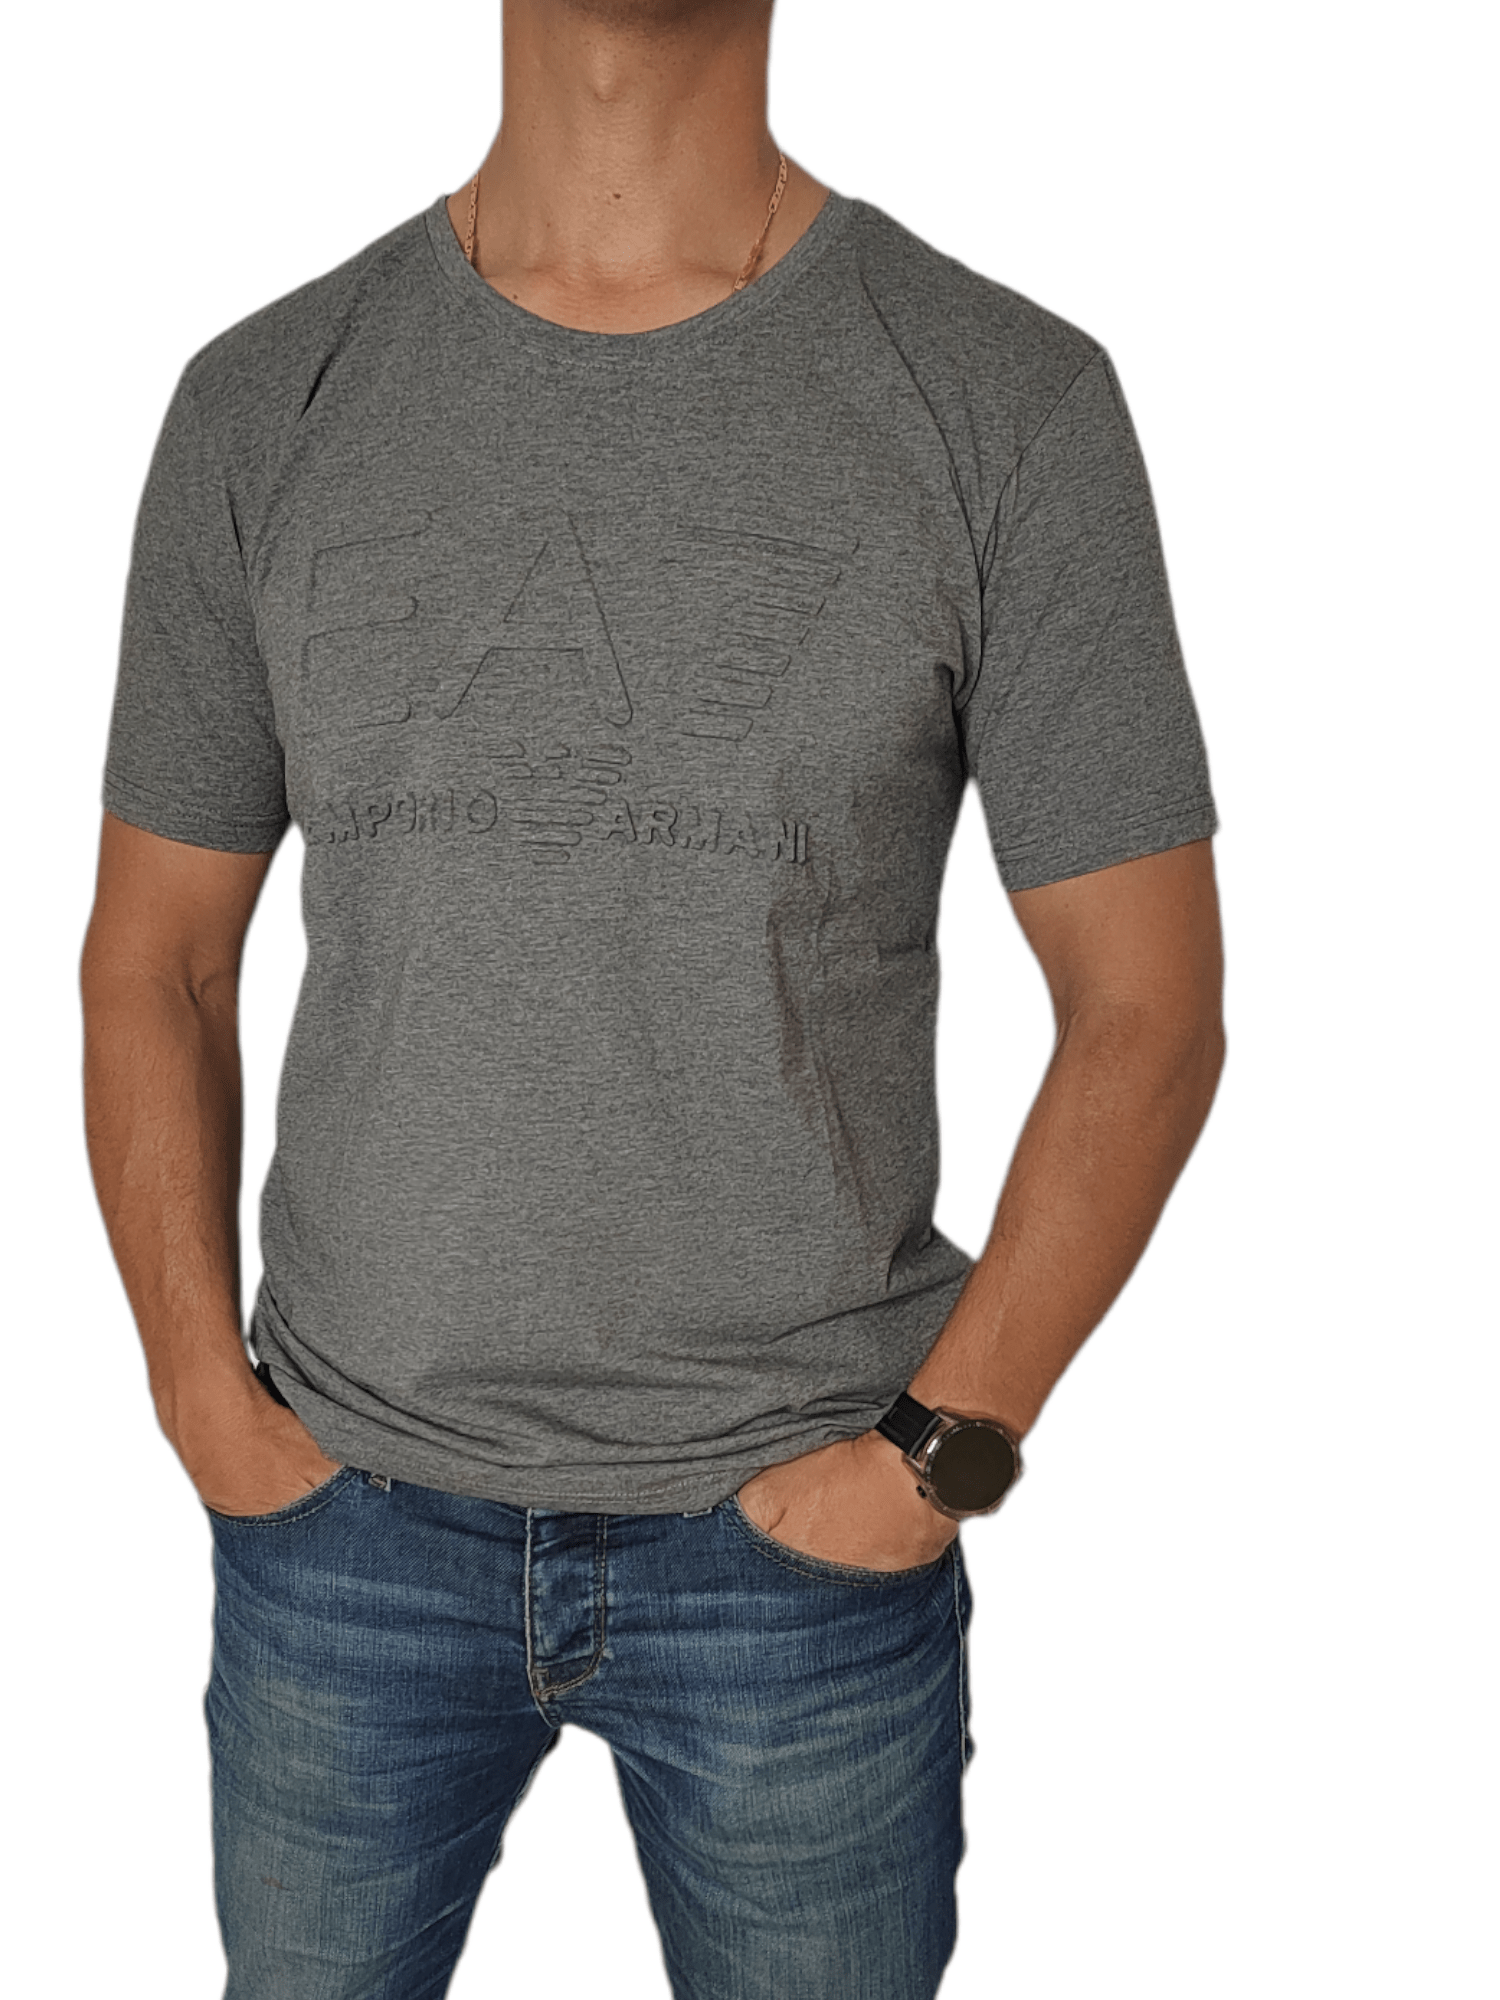 ElOutlet - Men Summer Men T-Shirt Men Round Tshirt (EA7) (Slim-Fit) - Grey